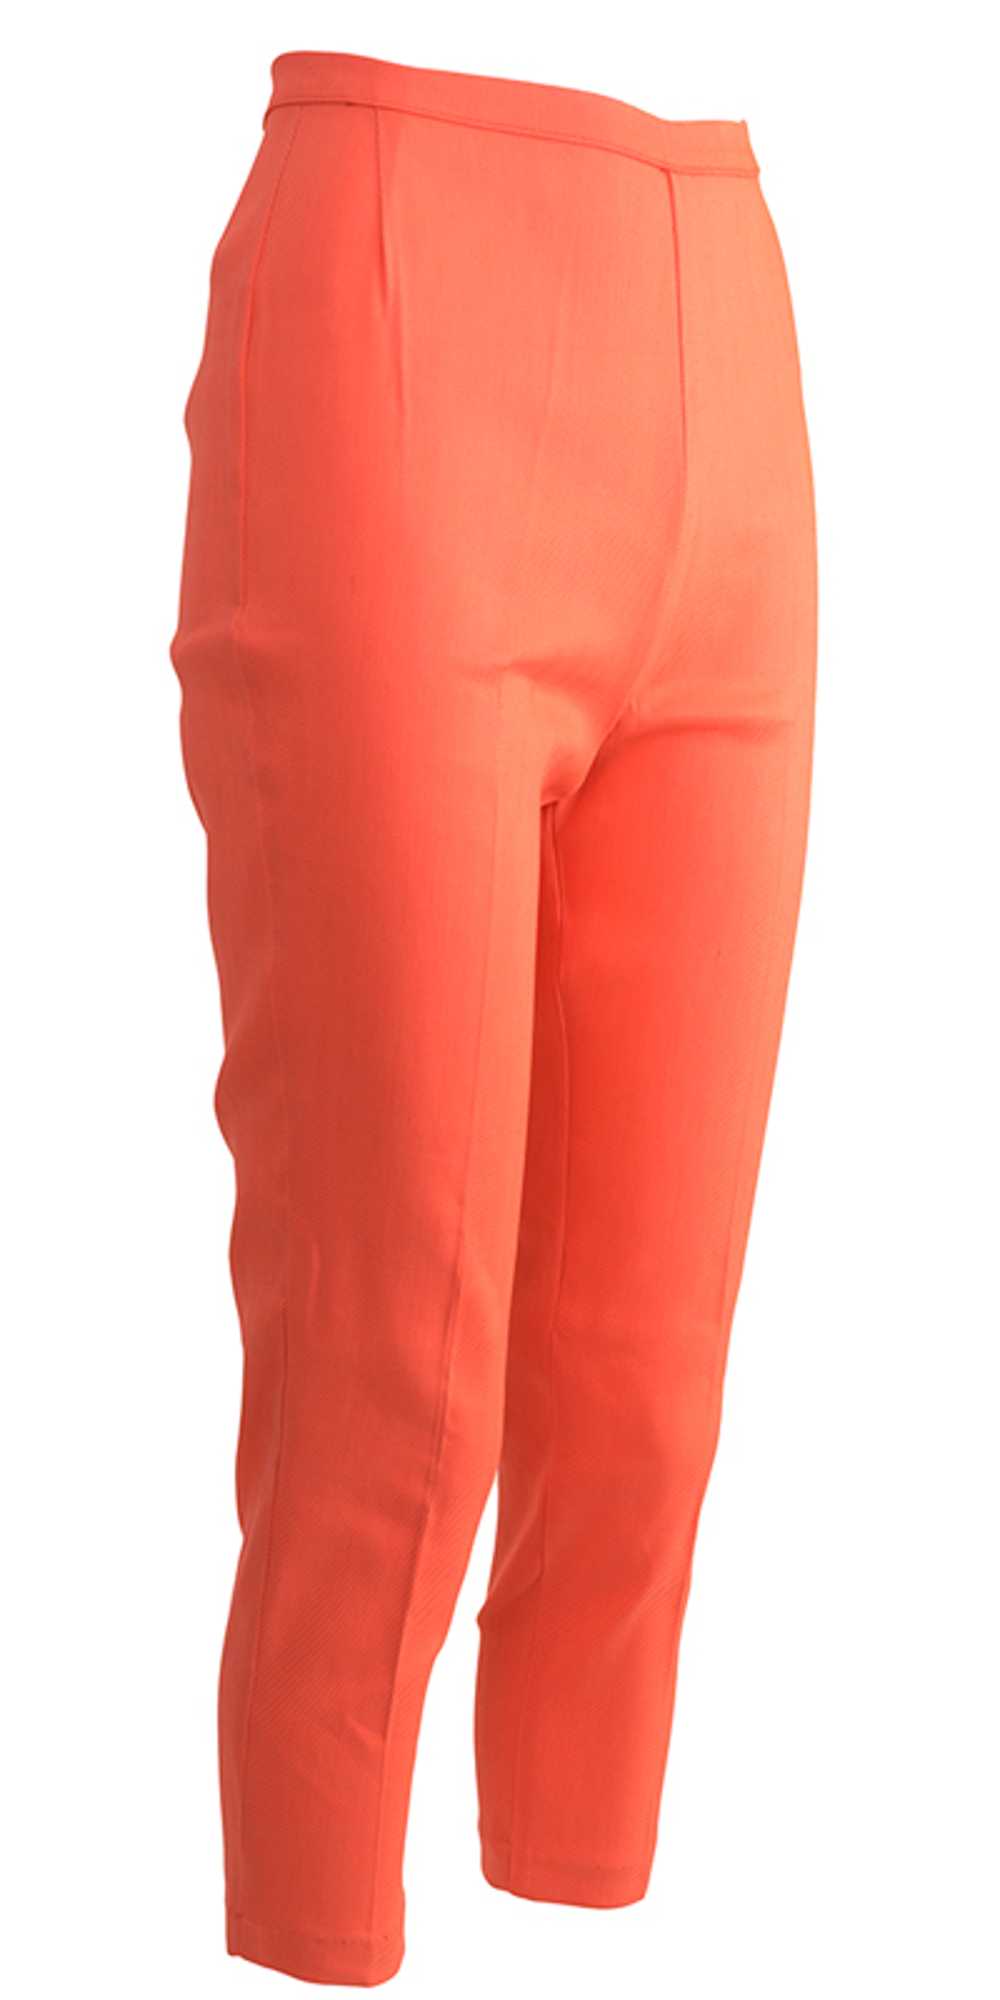 Orange Sherbet 50s Stretch Capris - image 1